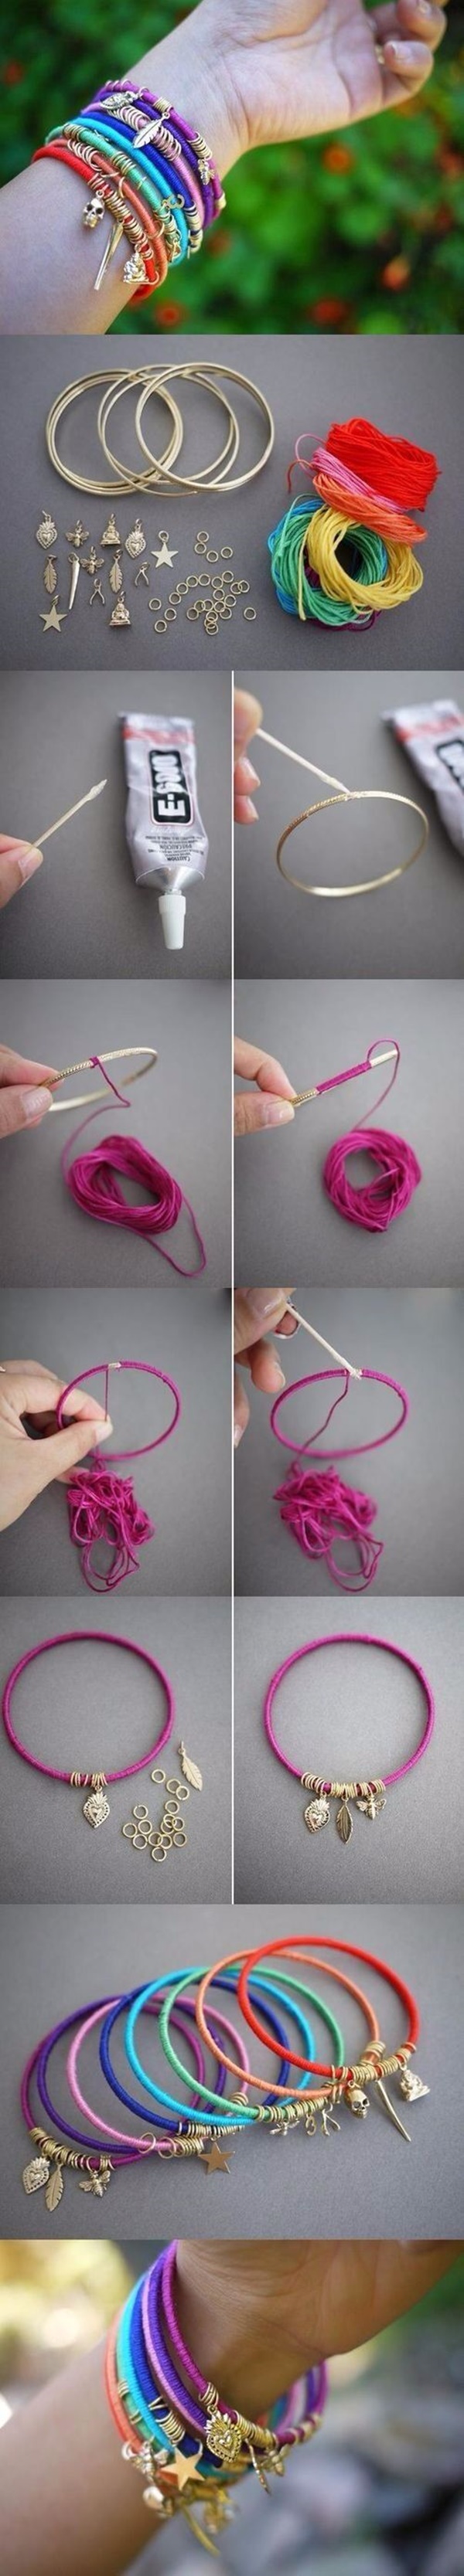 15-valentines-day-craft-ideas-with-yarn-6